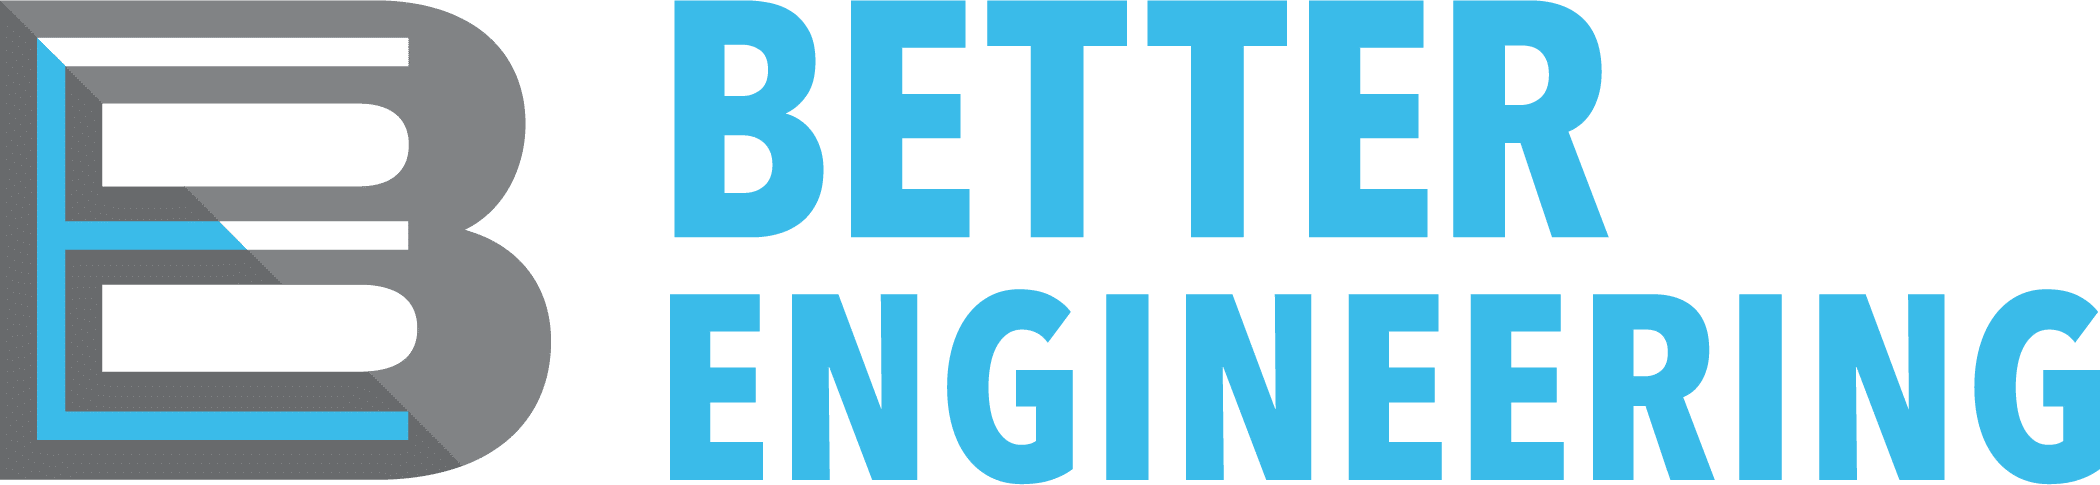 Better Engineering Logo